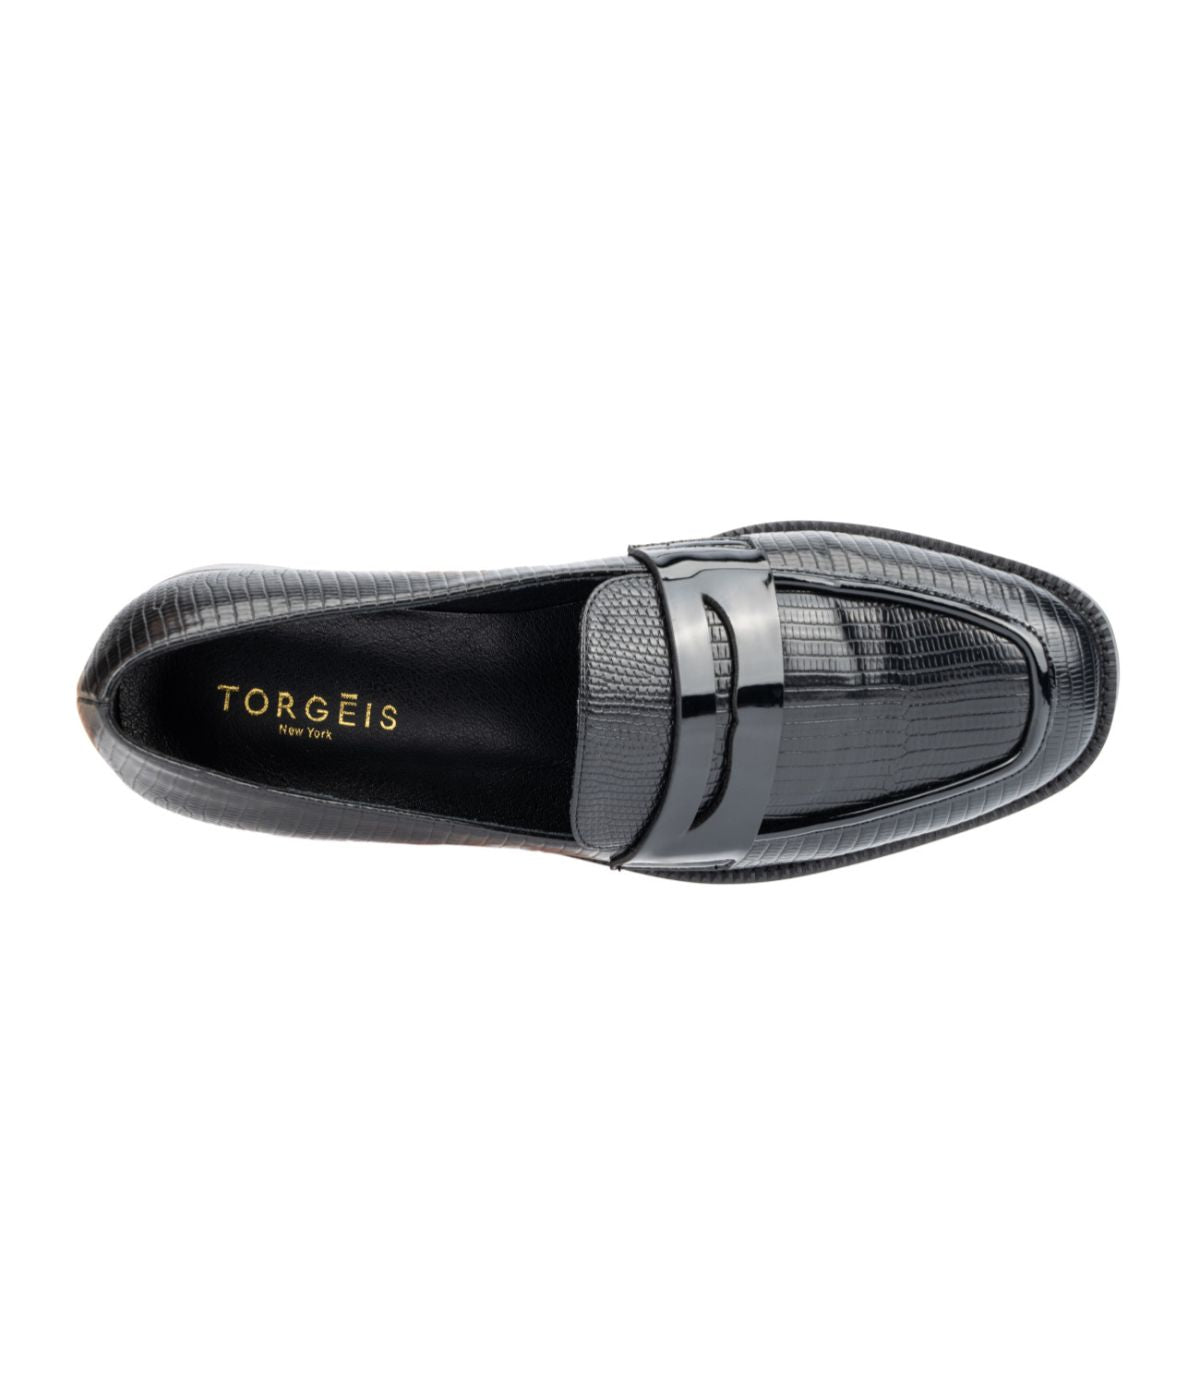 Torgeis Women's Teagan Loafers Black